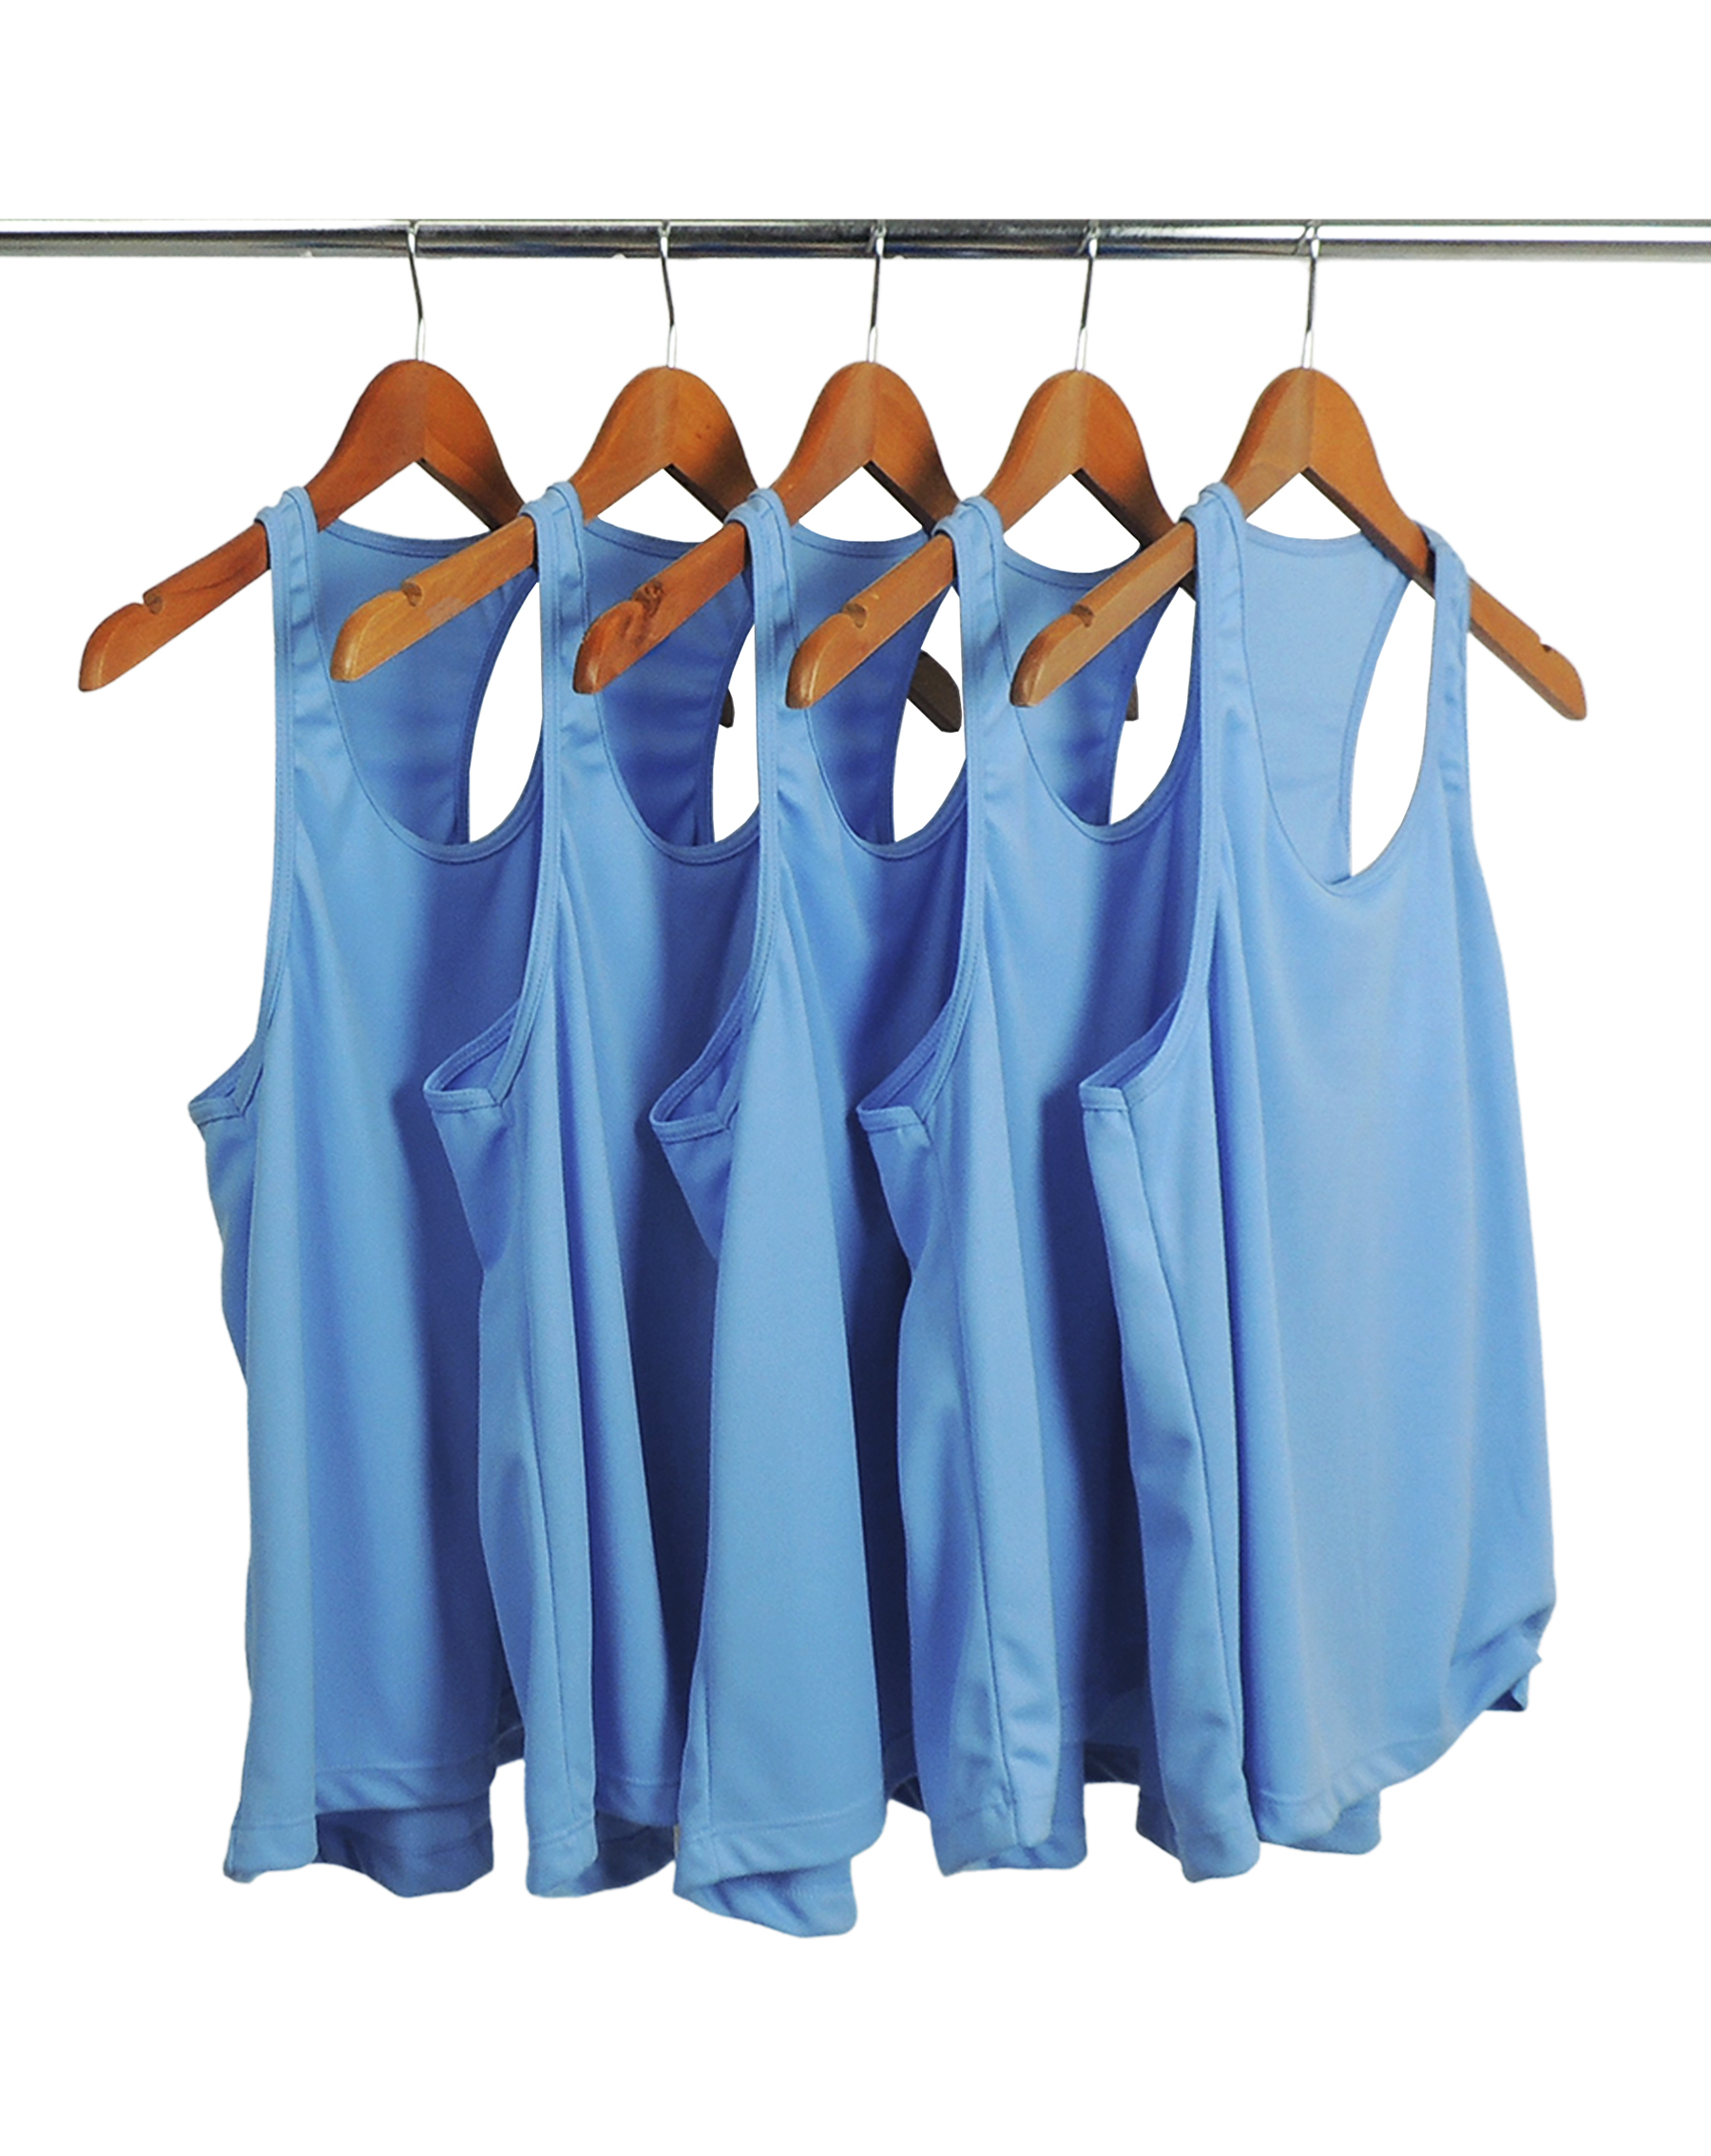 Kit 5 Regatas Feminina Dry Fit Azul Claro Proteção UV 30+